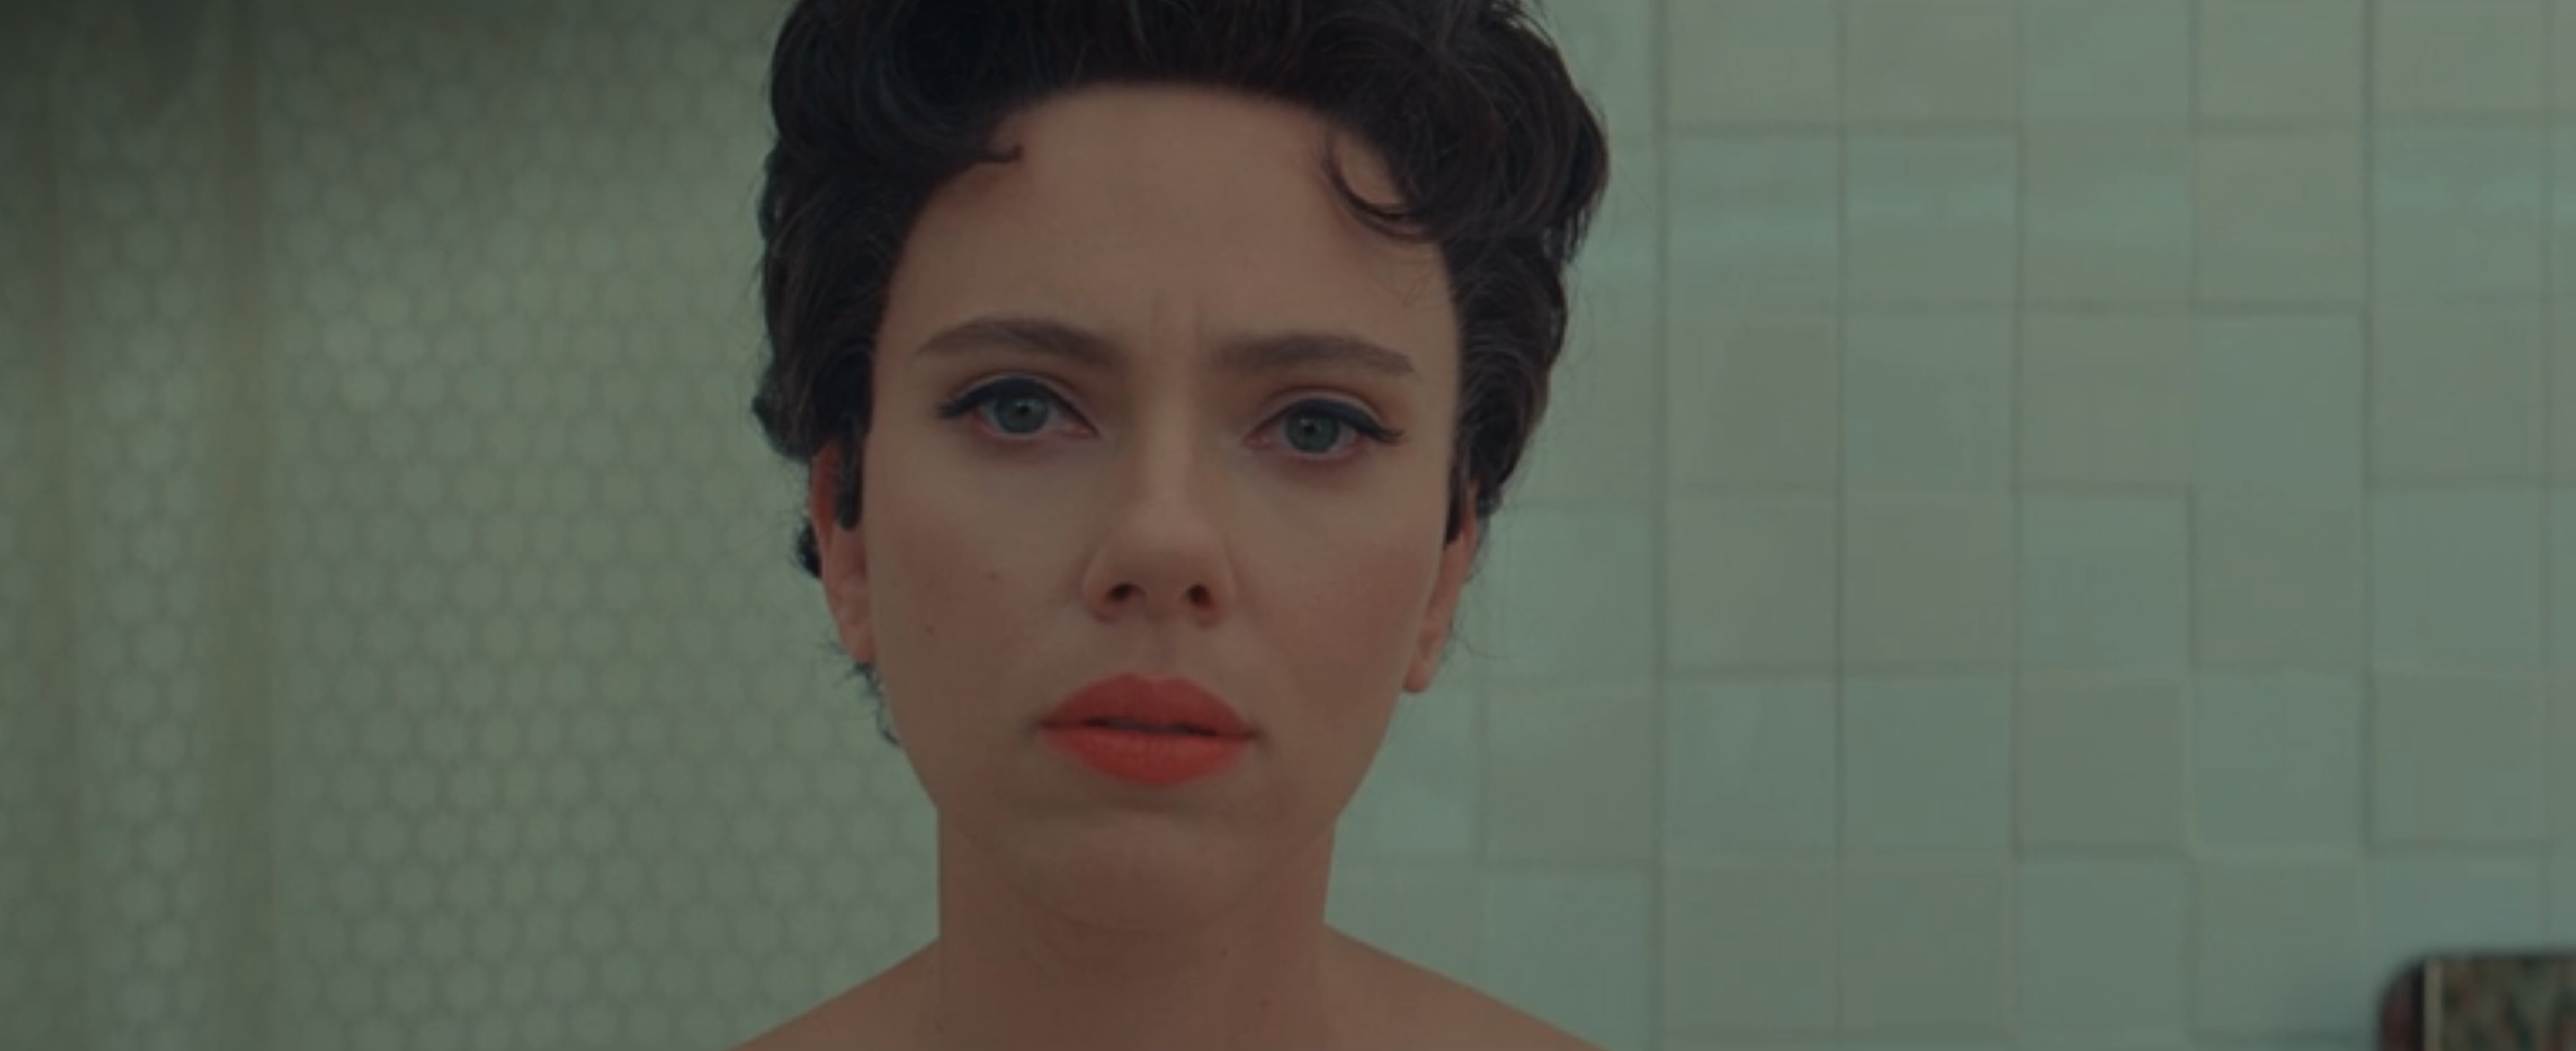 Asteroid City Cast on Peacock - Scarlett Johansson as Midge Campbell